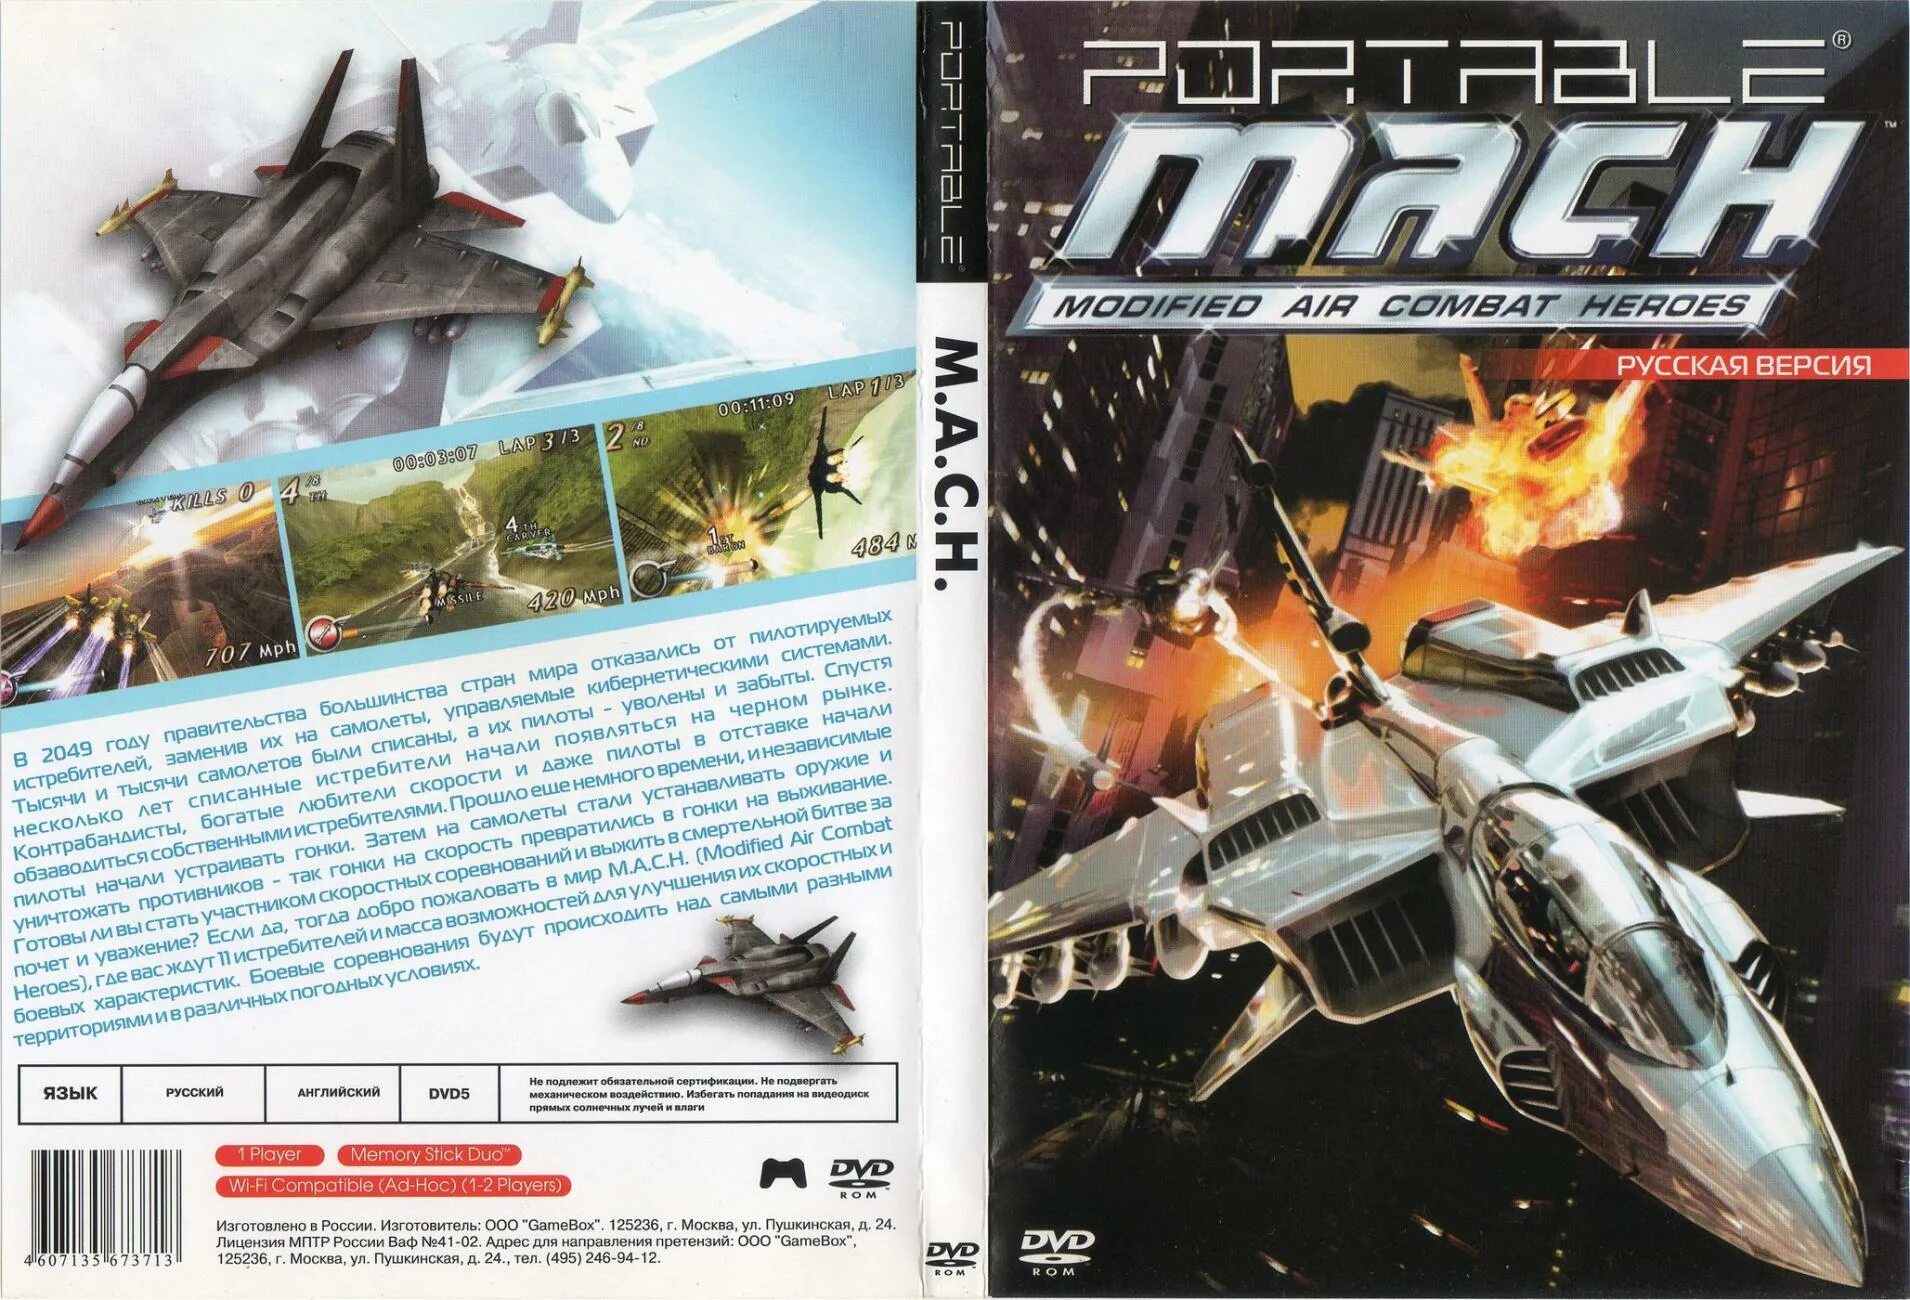 Combat hero. M.A.C.H. modified Air Combat Heroes PSP. Mach PSP. Игра на PSP Air Combat. Mach игра на ПСП.